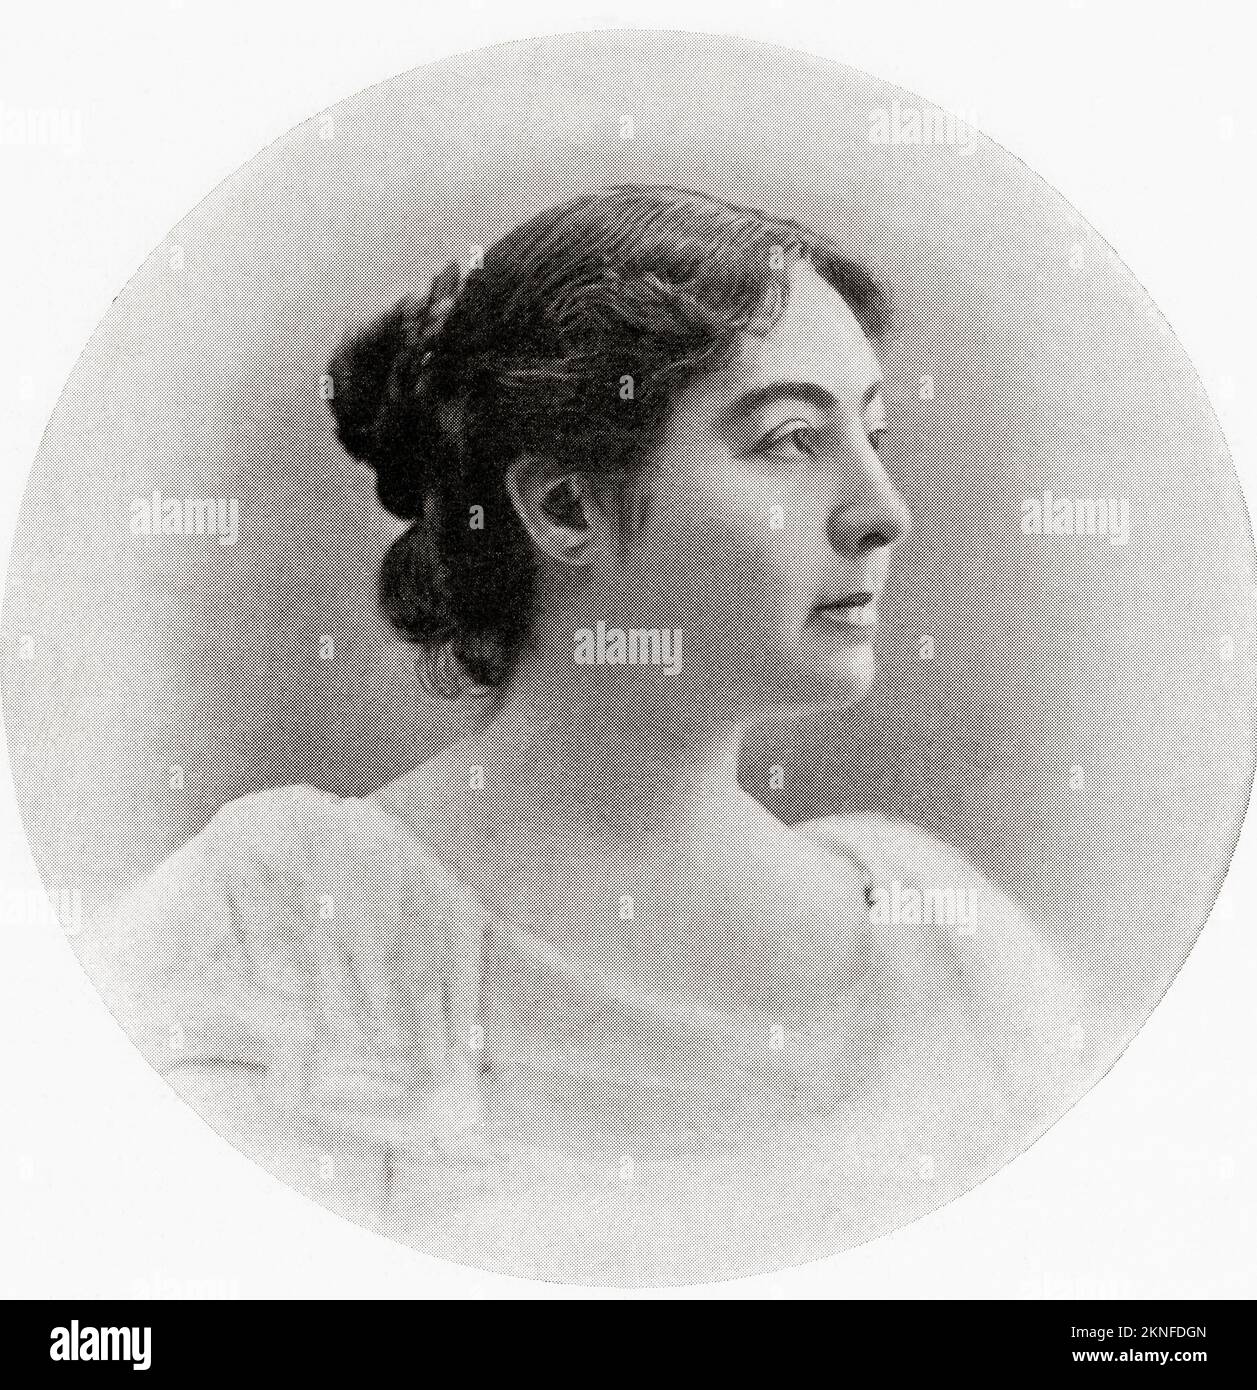 Natalija Obrenović, 1859 - 1941, aka Natalie di Serbia. Principessa consorte di Serbia dal 1875 al 1882 e poi Regina consorte di Serbia dal 1882 al 1889, come moglie di Milano i di Serbia. Foto Stock